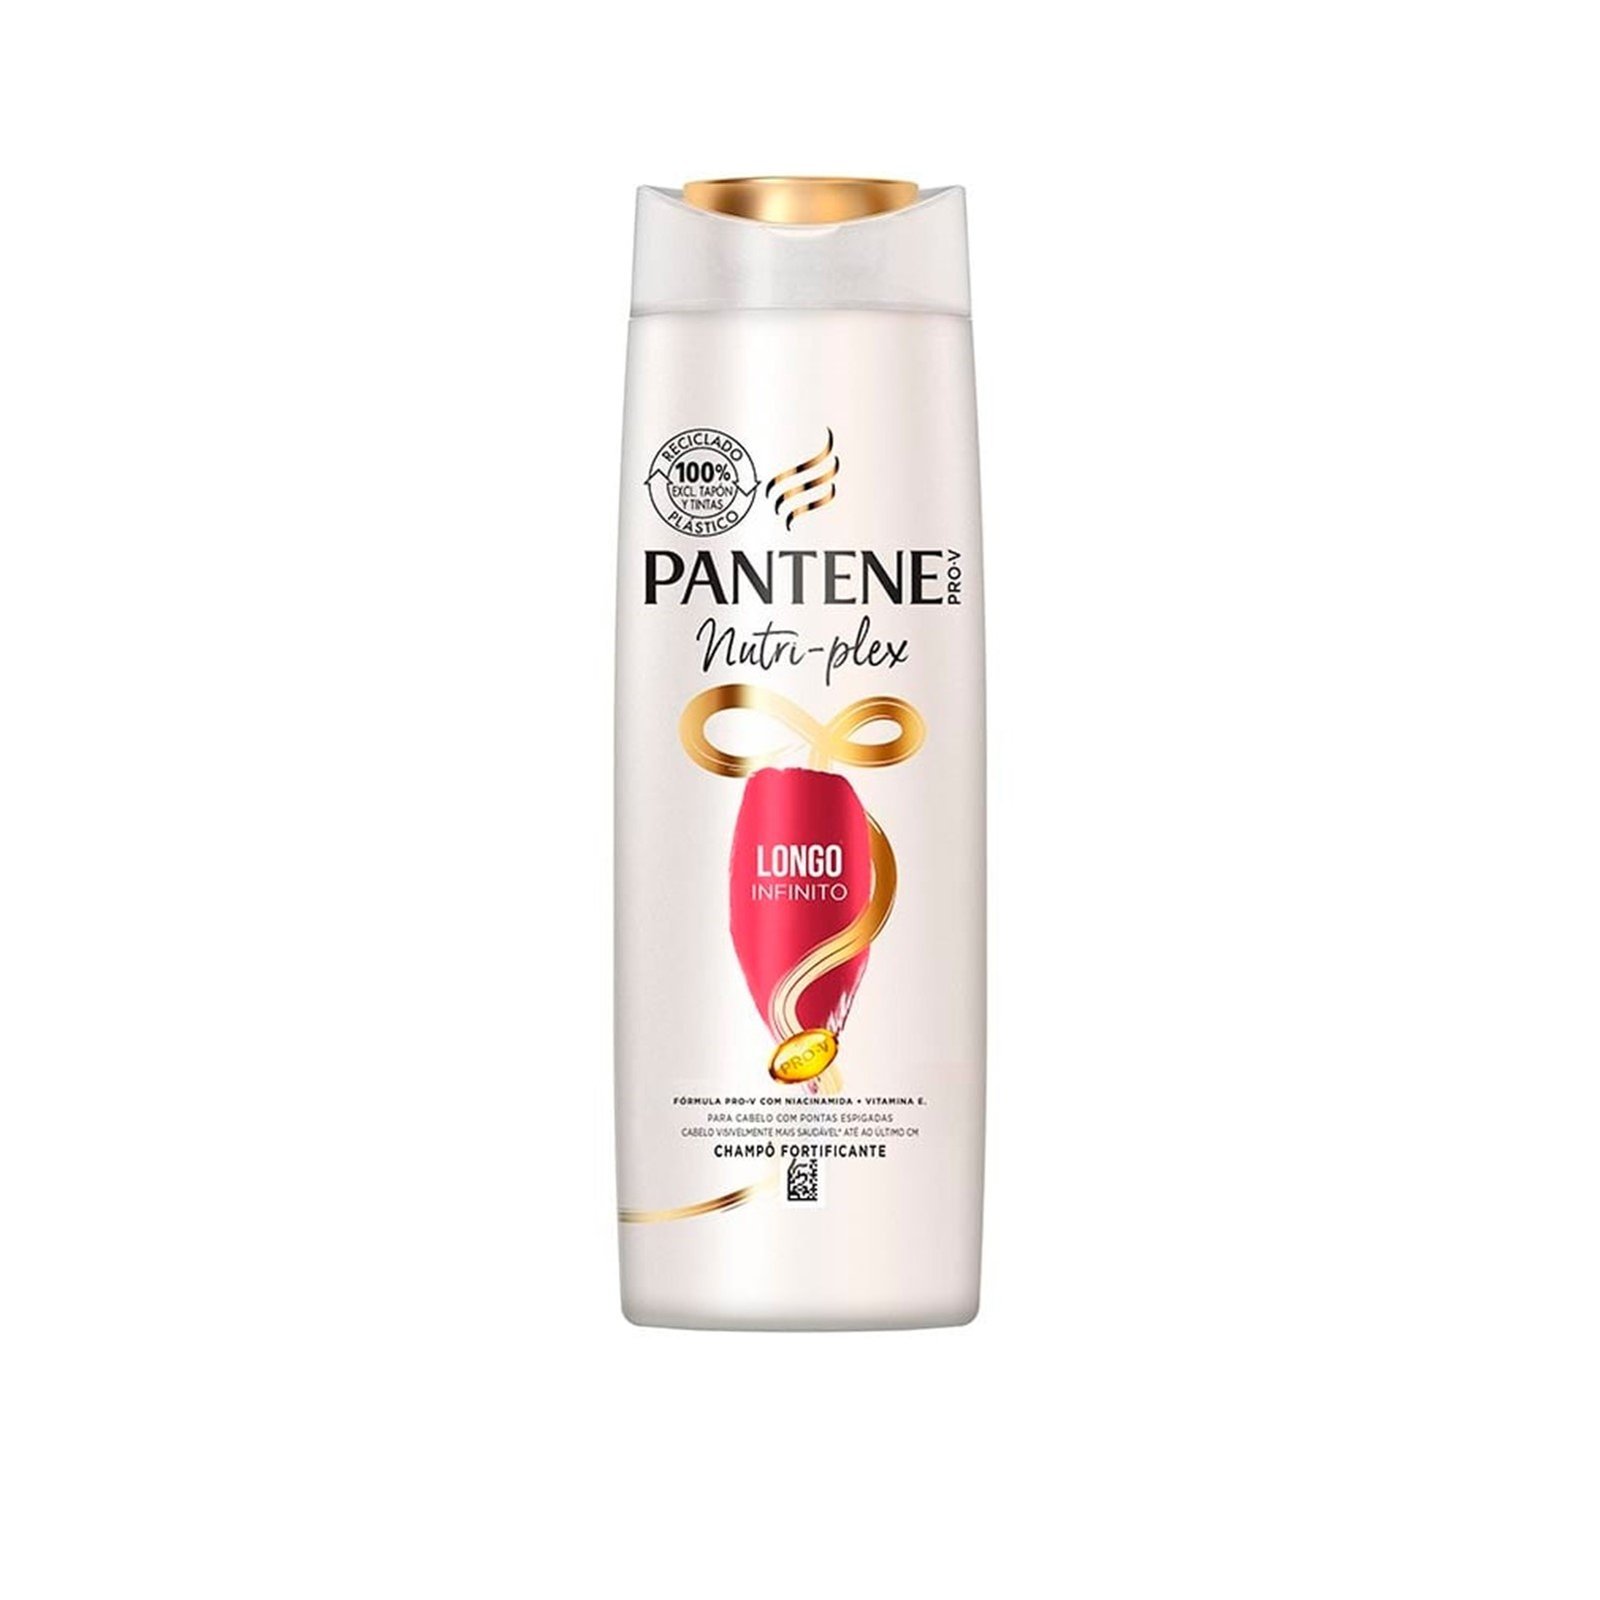 Pantene Pro-V Nutri-Plex Infinite Lenghts Shampoo 385ml (13.01 fl oz)